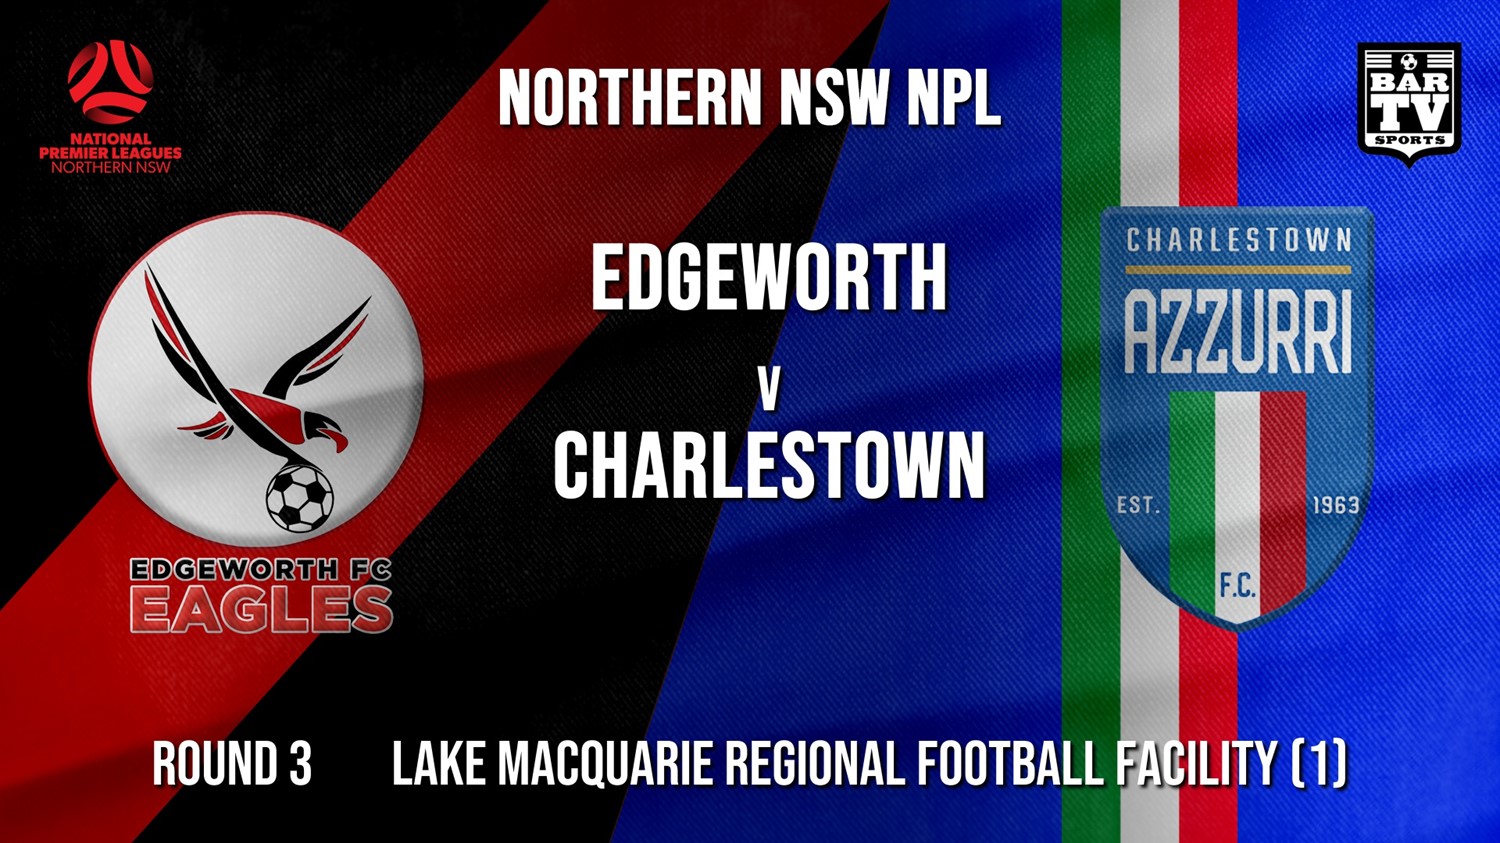 NPL - NNSW Round 3 - Edgeworth Eagles FC v Charlestown Azzurri (1) Minigame Slate Image